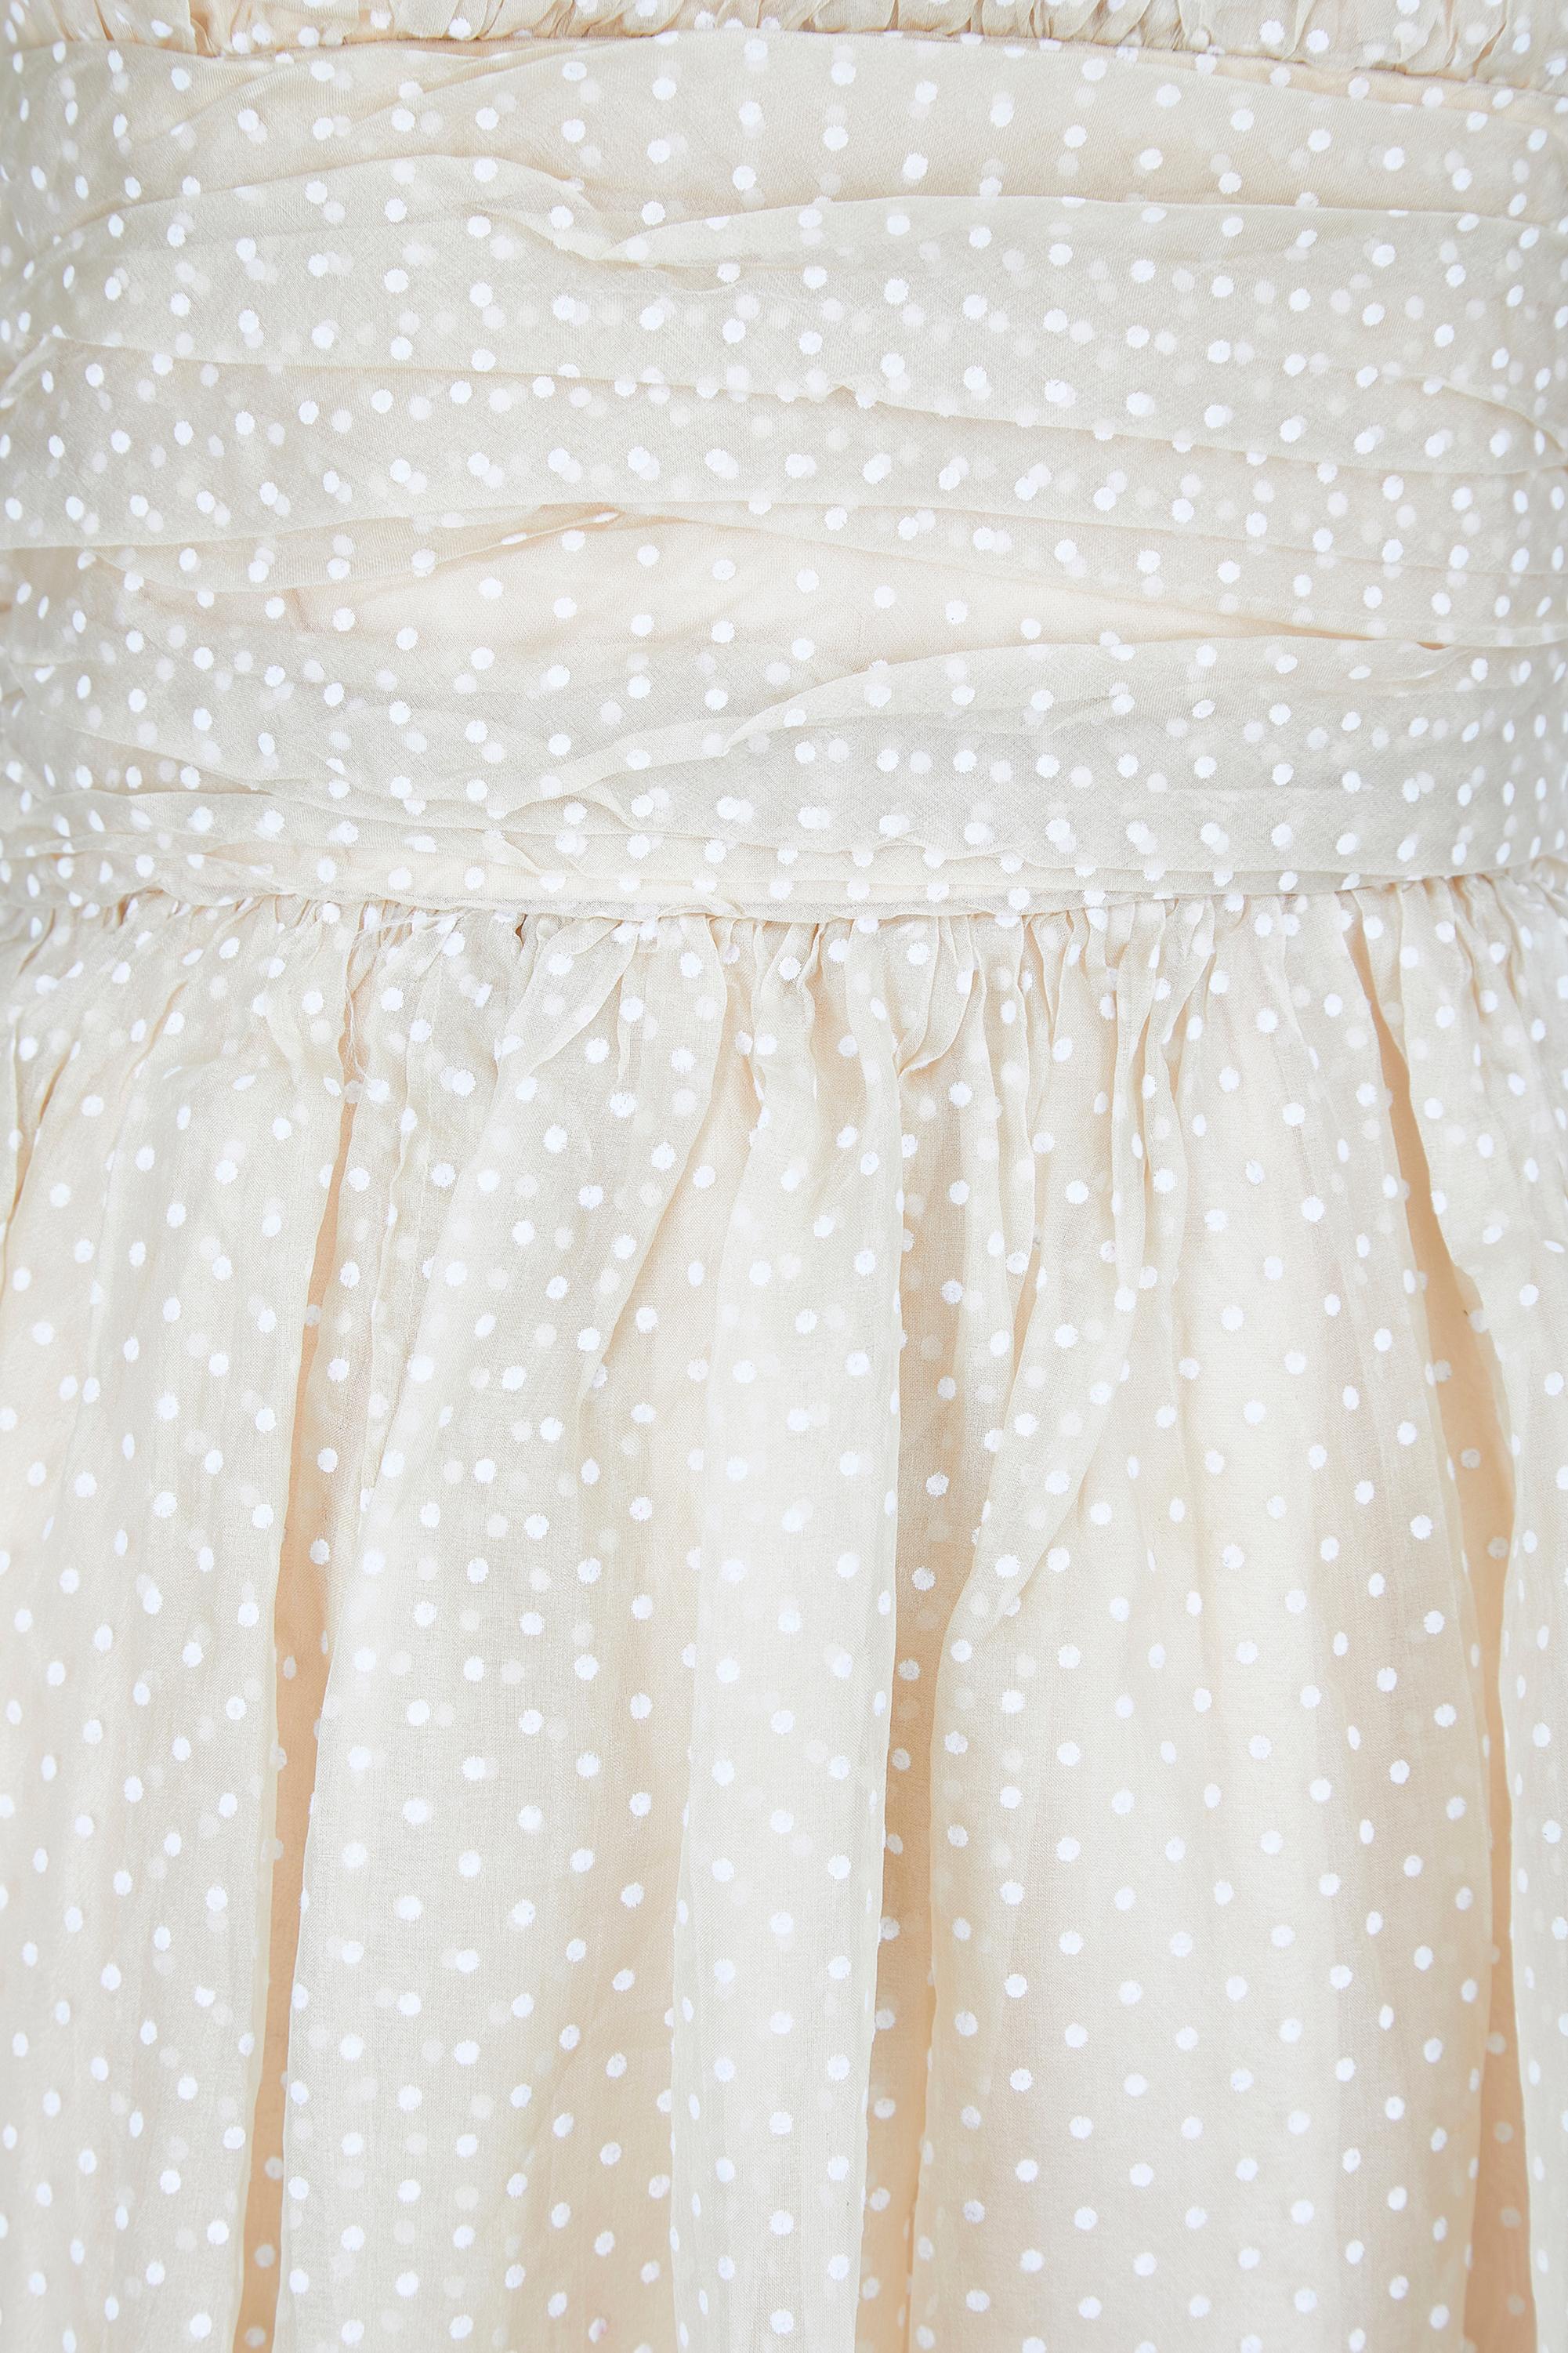 Women's 1960s Blanes Beige and White Polka Dot Chiffon Dress For Sale